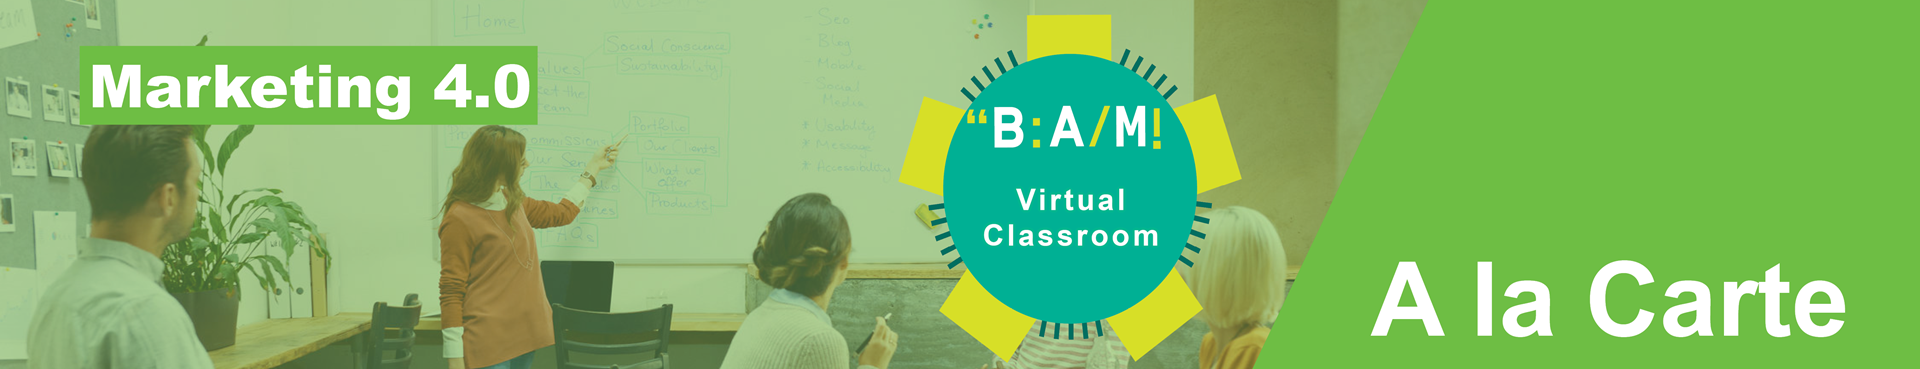 marketing4.0_virtual classroom